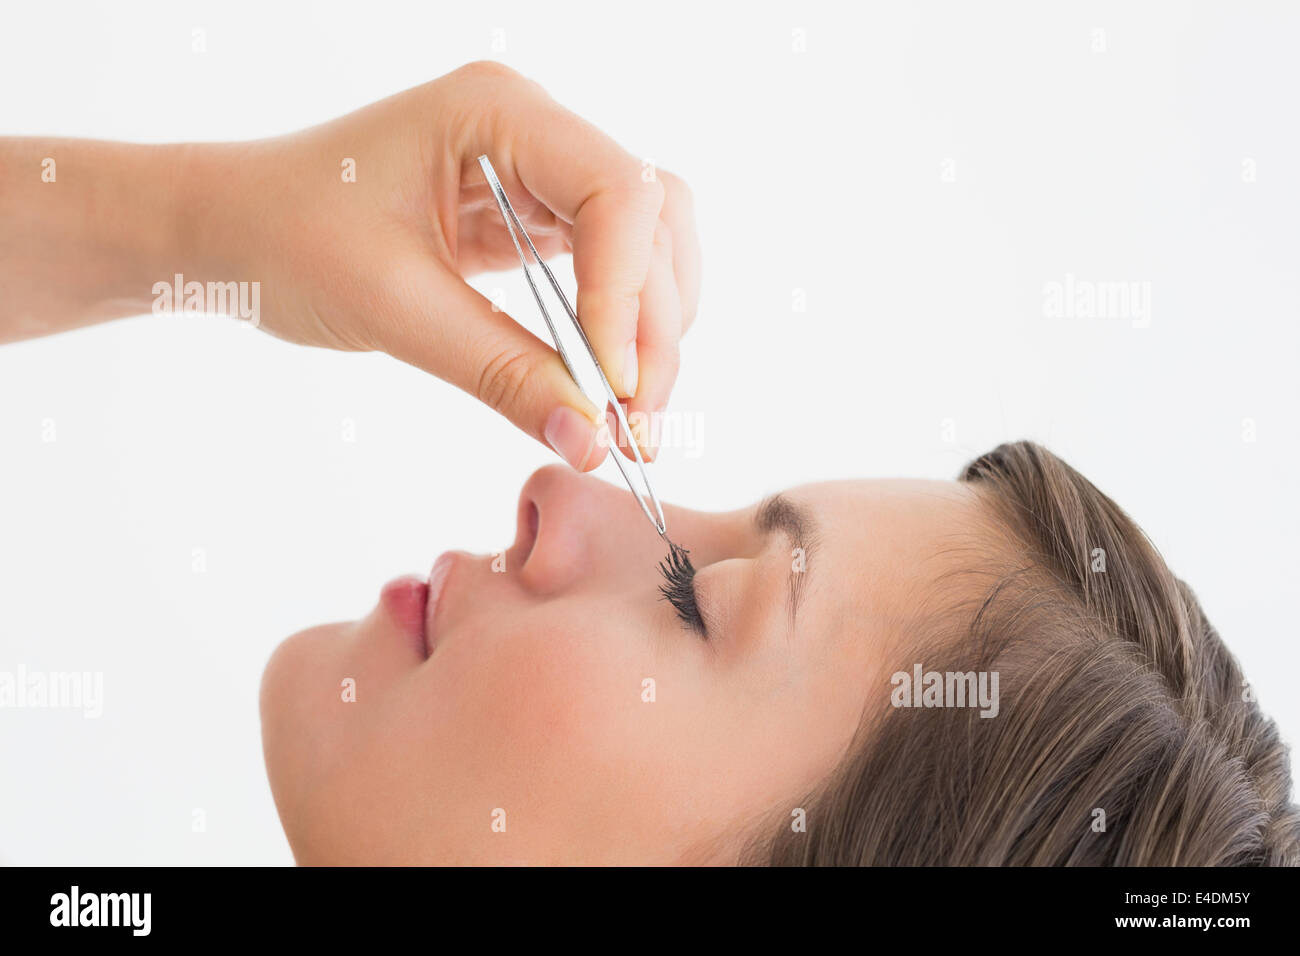 Close-up side view of hand plucking eyelashes Stock Photo